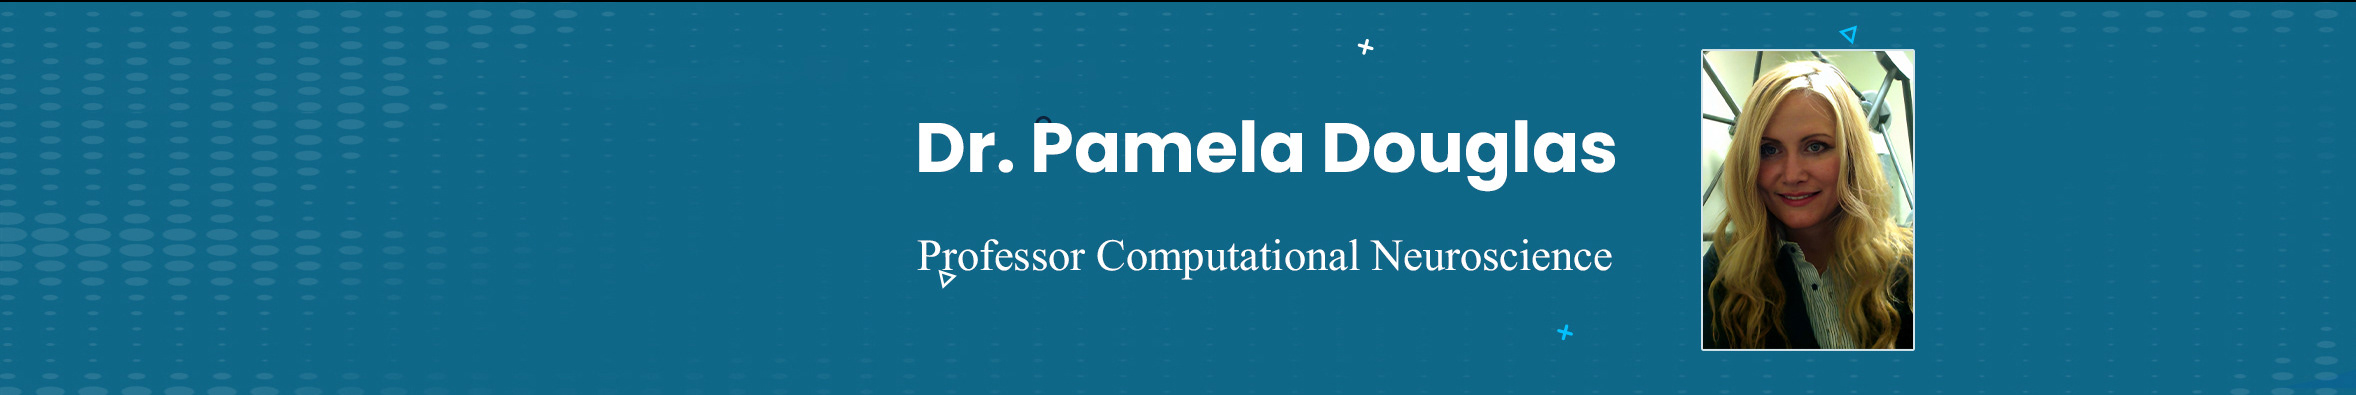 Dr. Pamela Douglas's profile banner